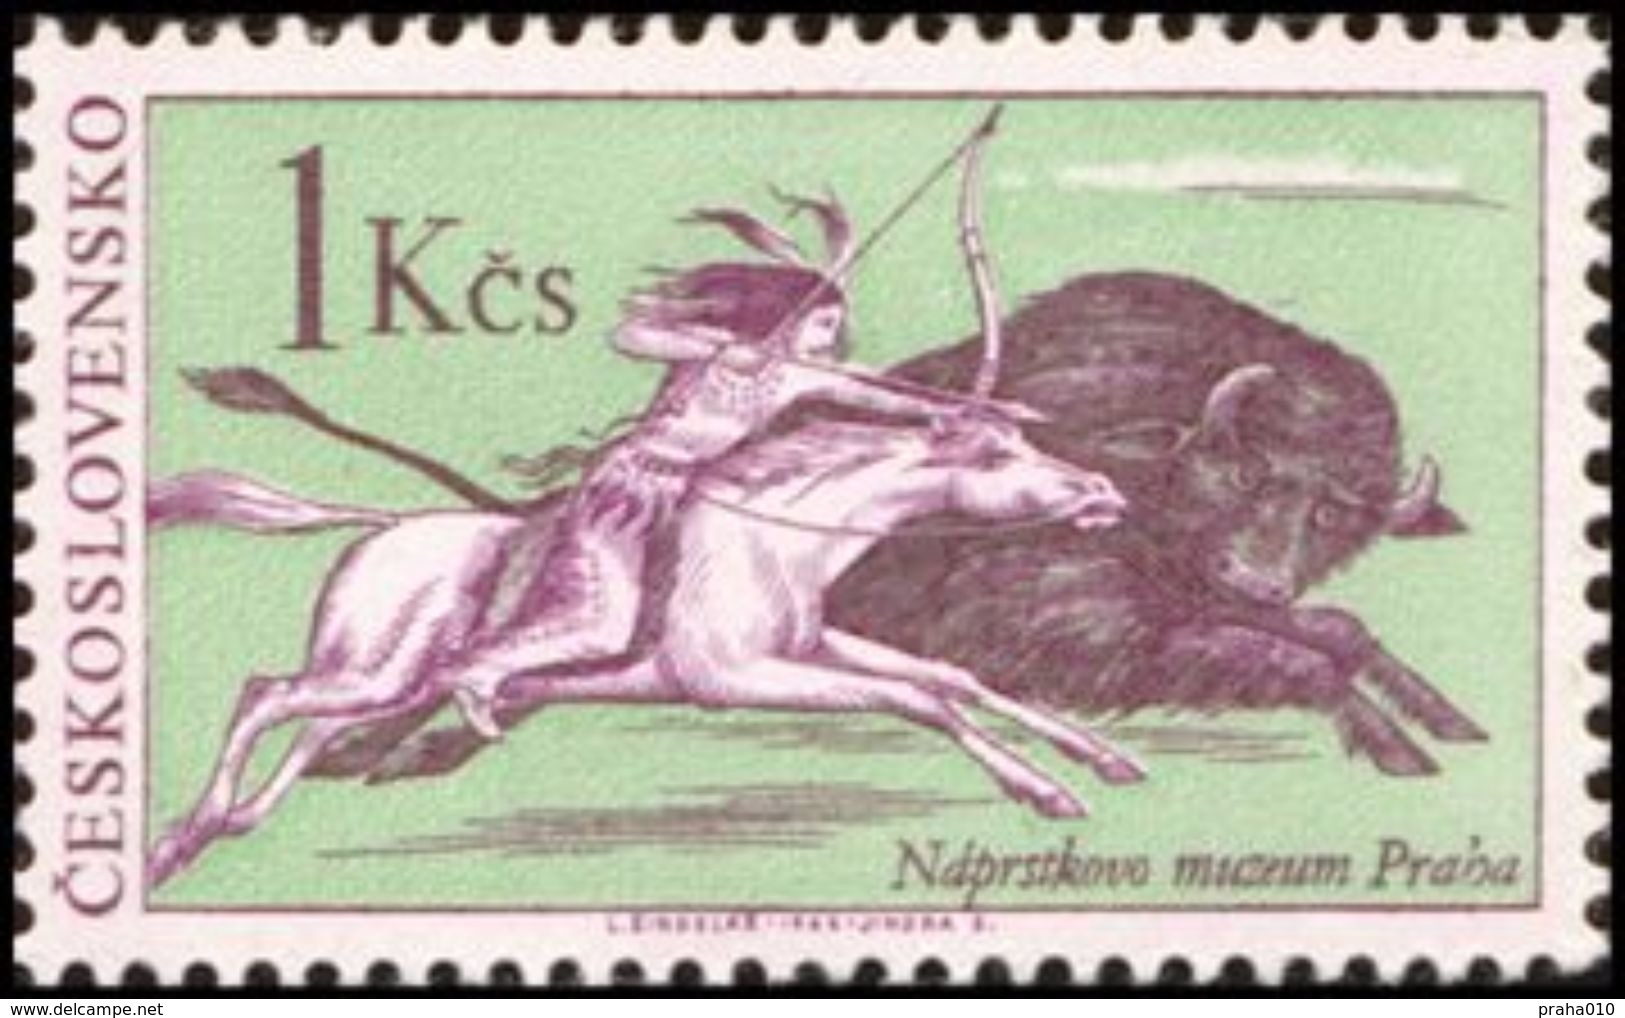 Czechoslovakia / Stamps (1966) 1539: Indians Of North America - Naprsteks Museum (Hunting Bison); Painter: L. Sindelar - Indiens D'Amérique